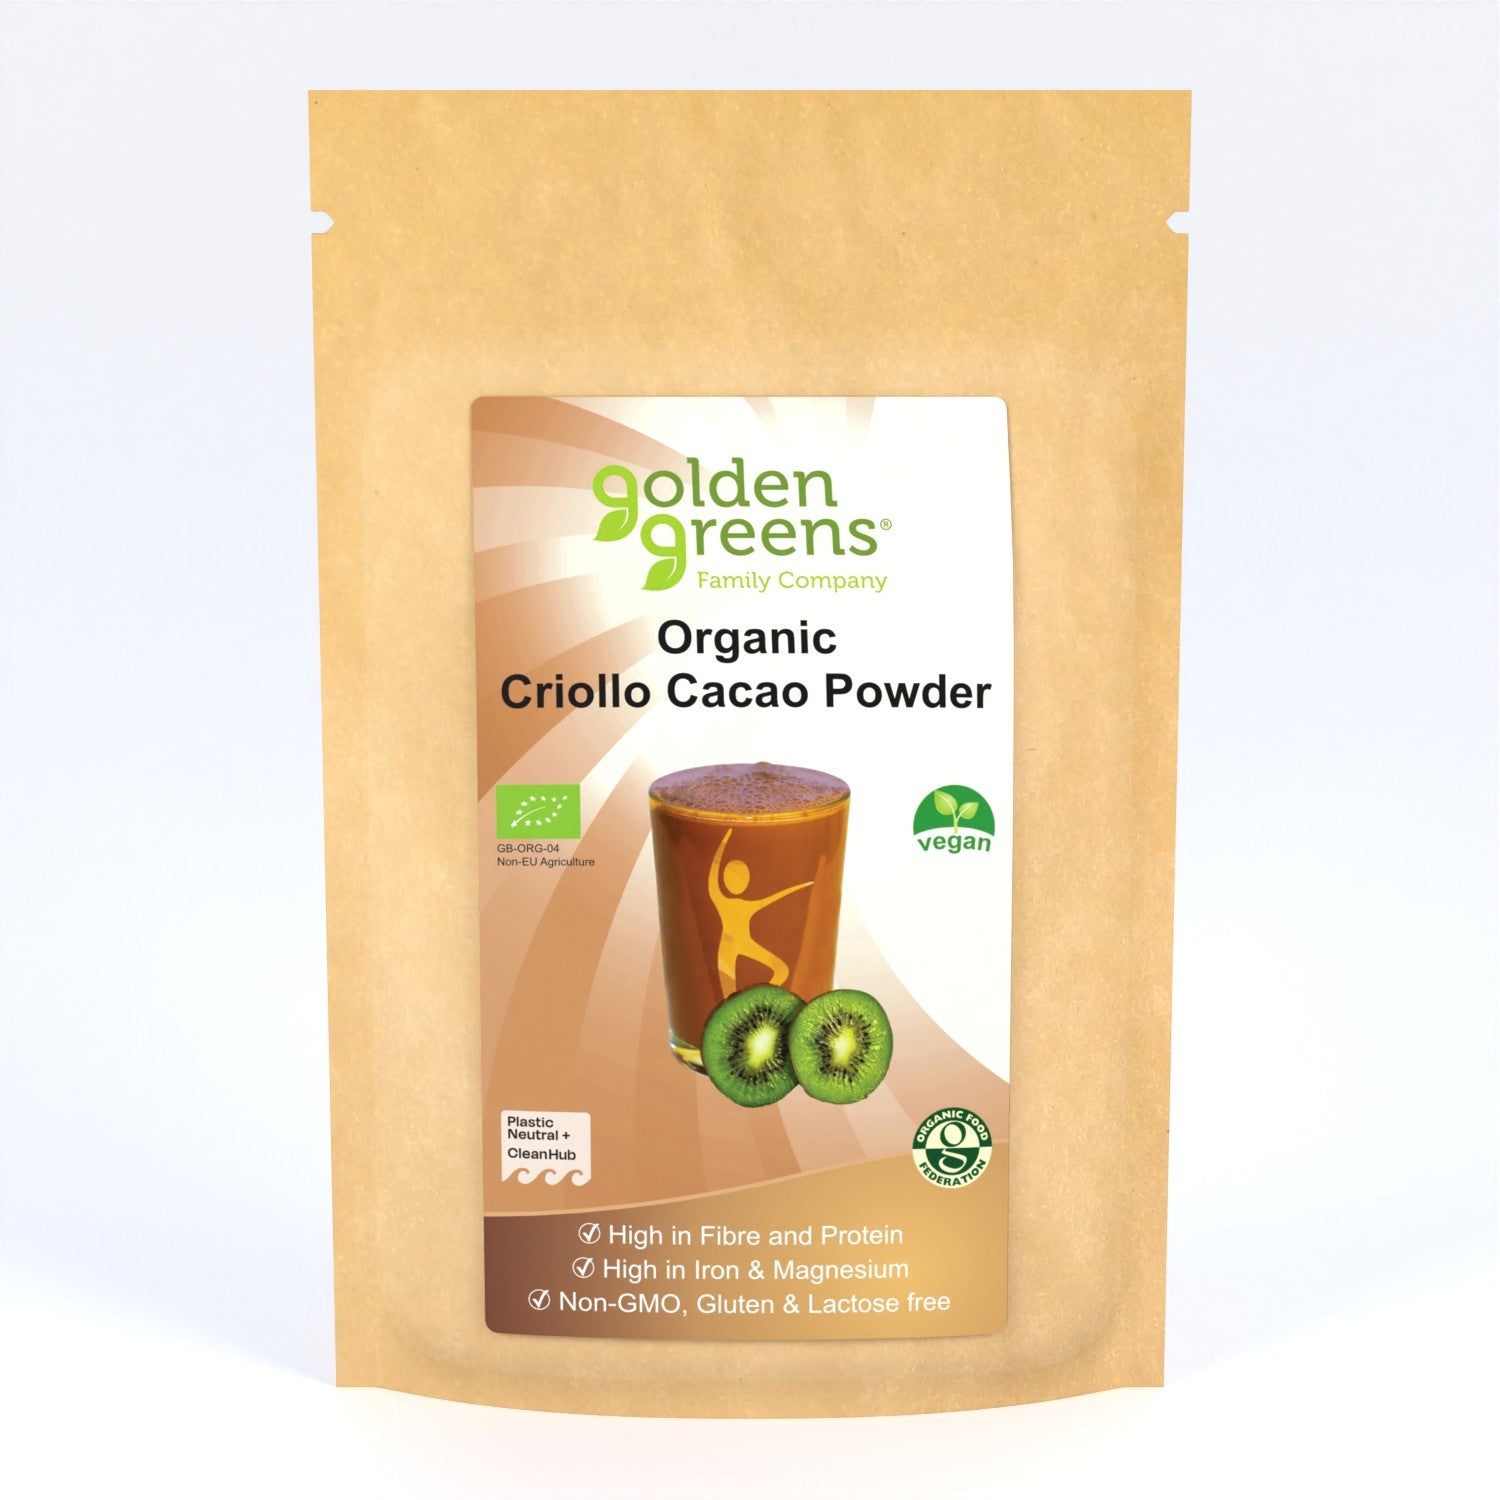 View Organic Criollo Cacao Powder information